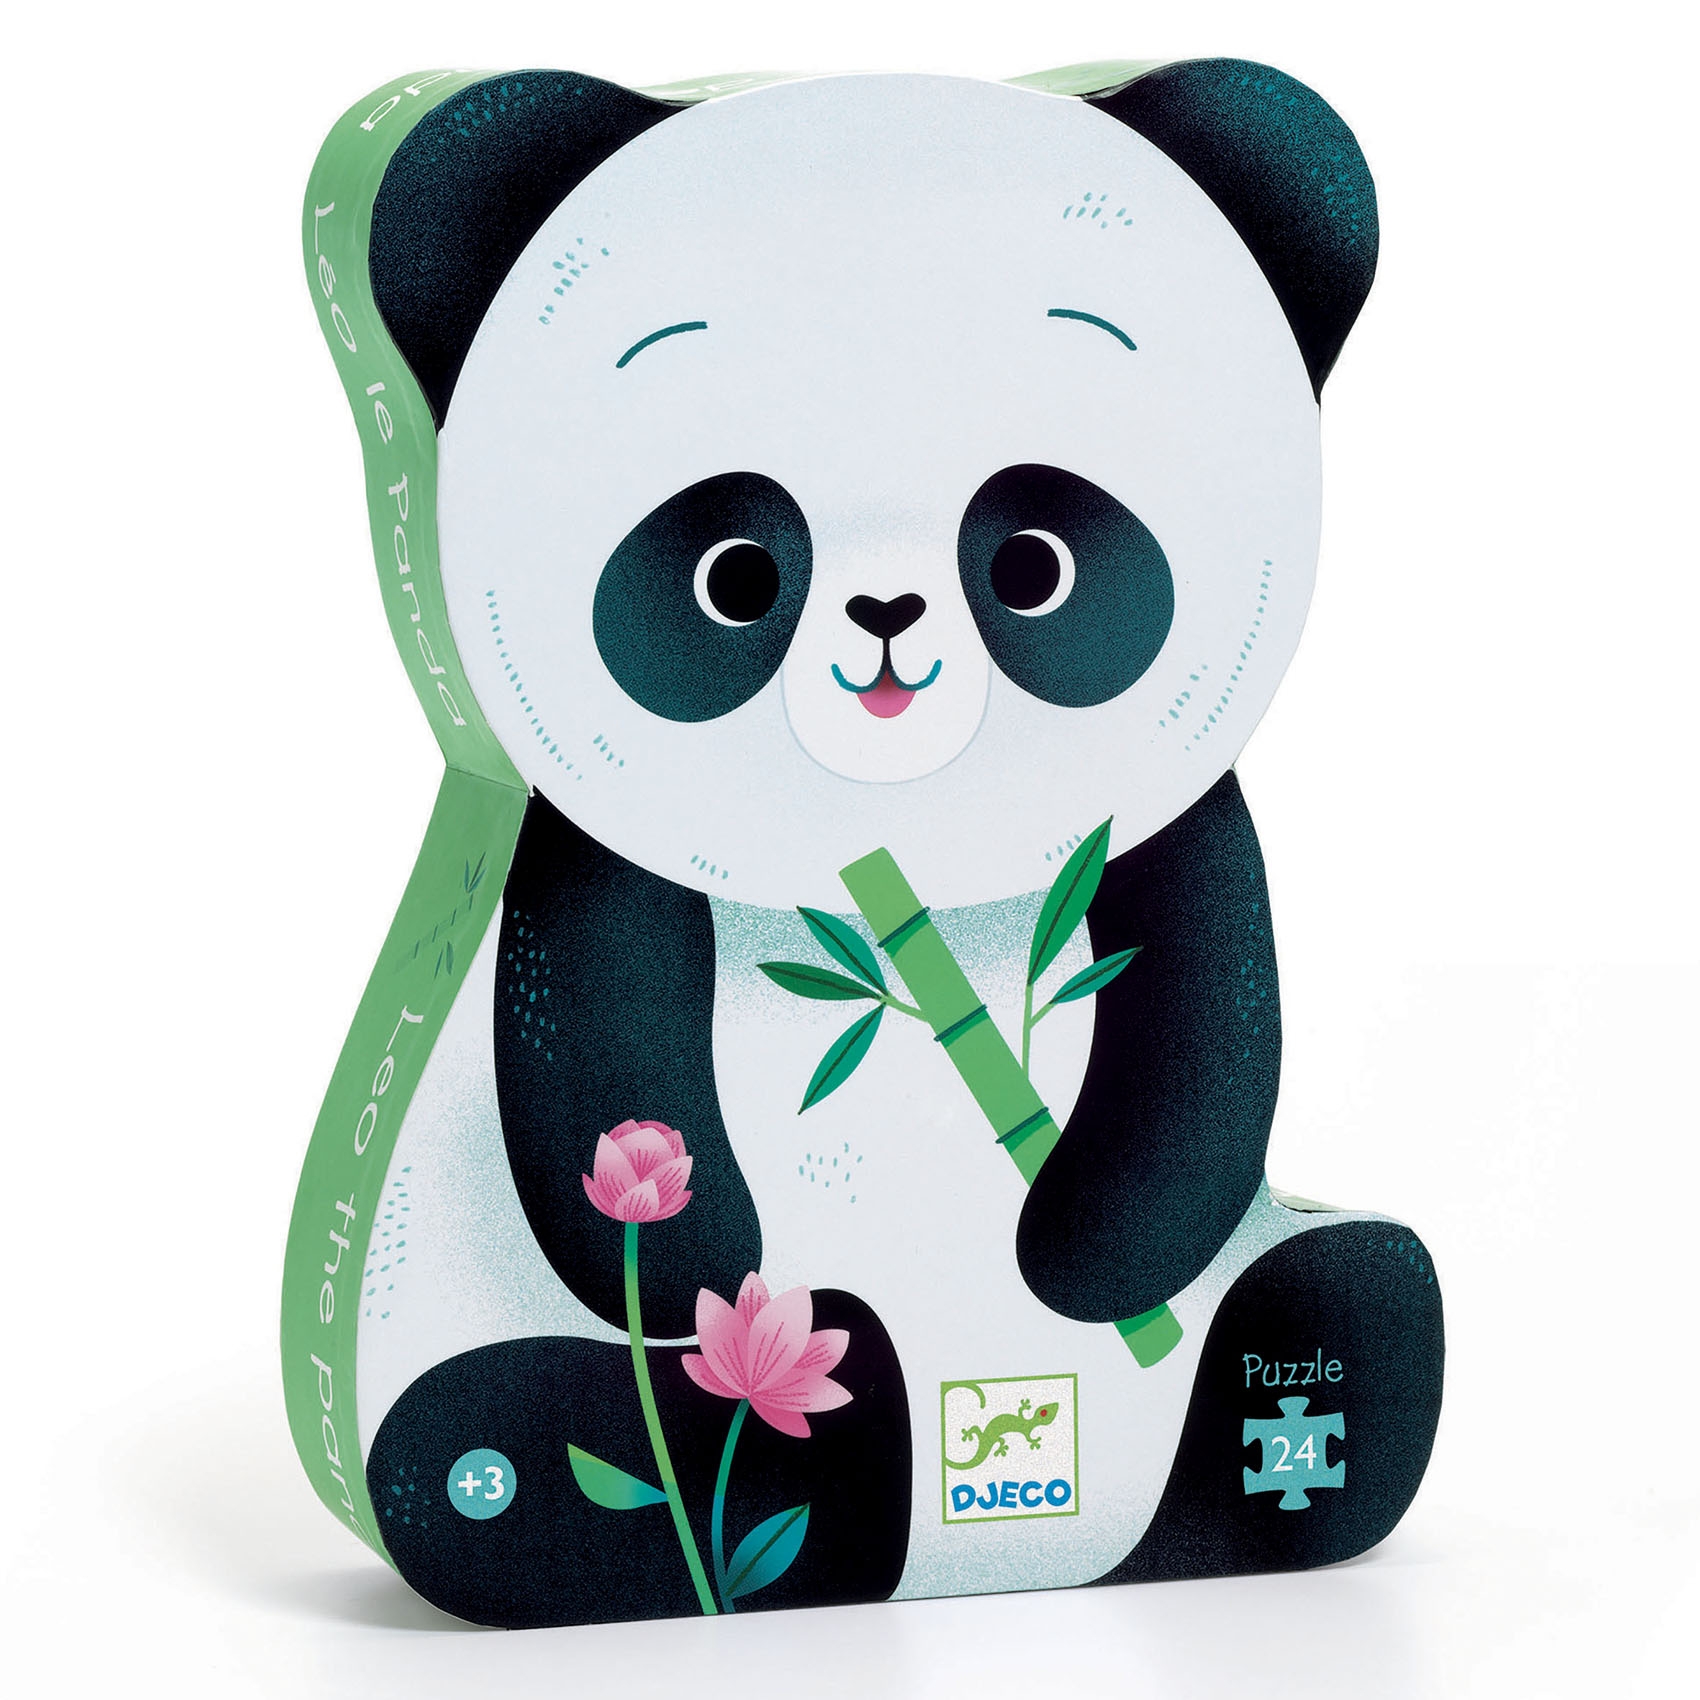 Formadobozos puzzle - Pici Panda Cuki - Leo the panda - 0